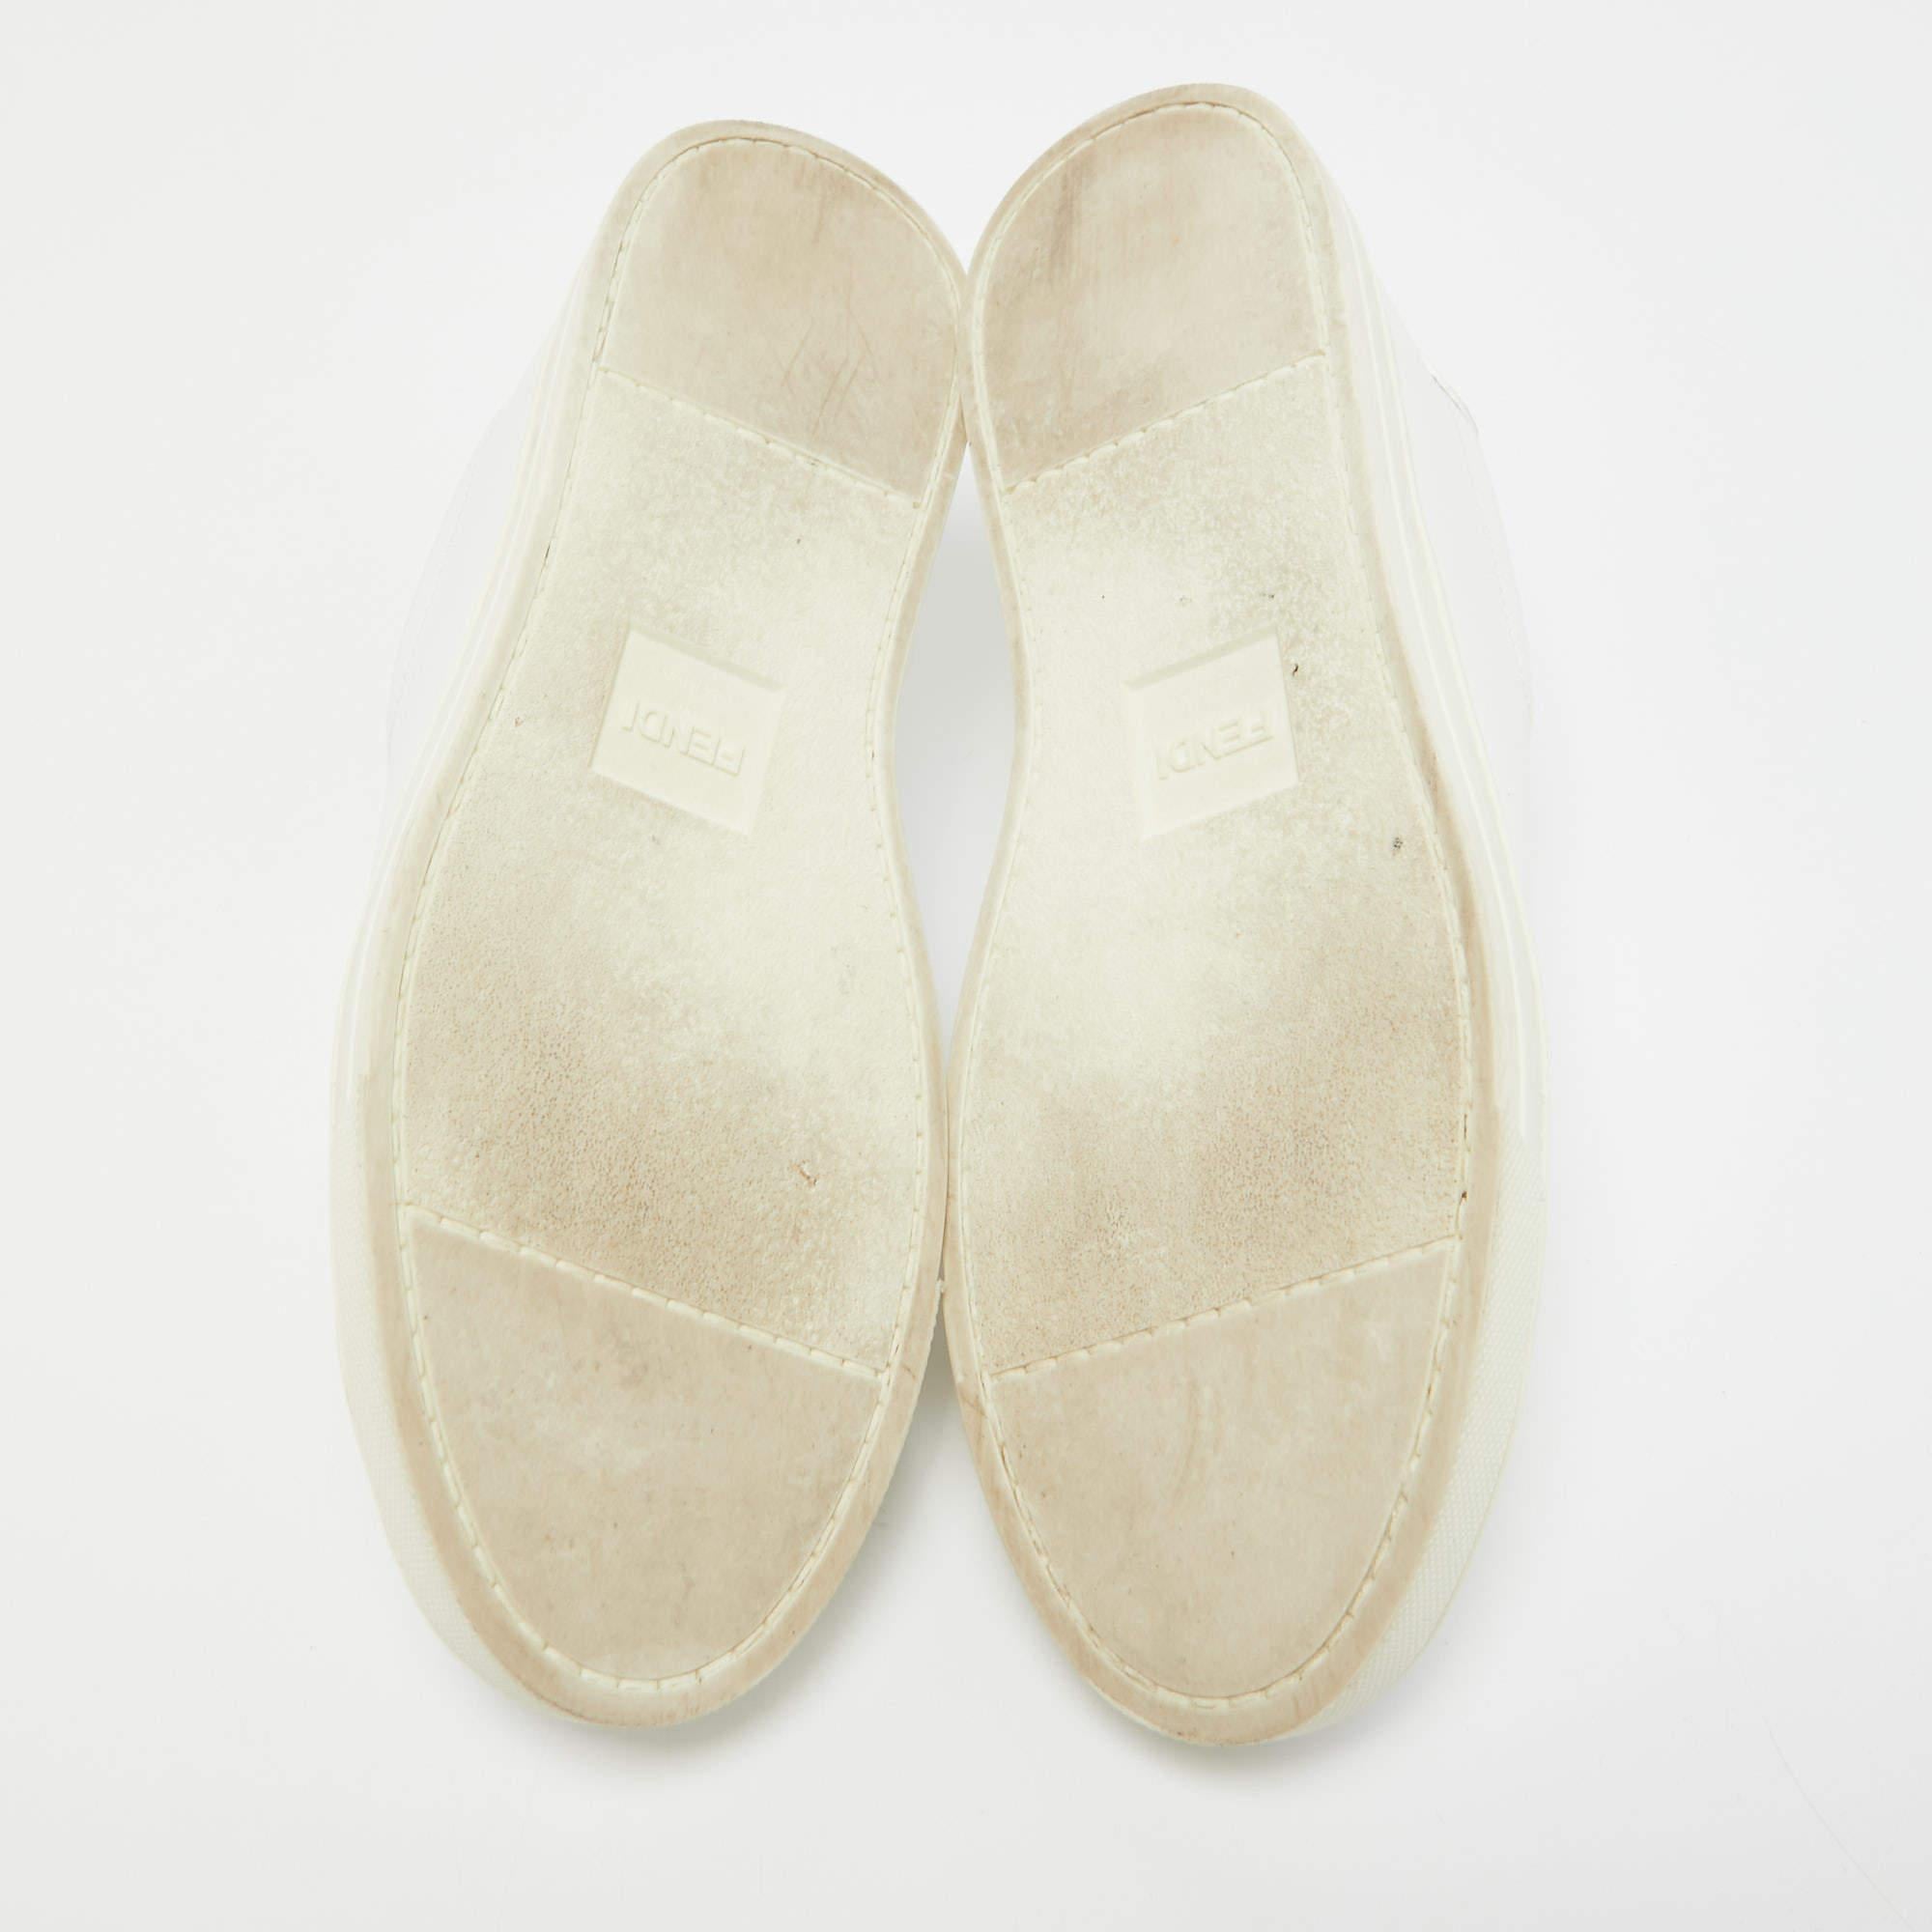 Fendi White Leather and Logo Knit Fabric Rockoko Slip On Sneakers Size 39 4